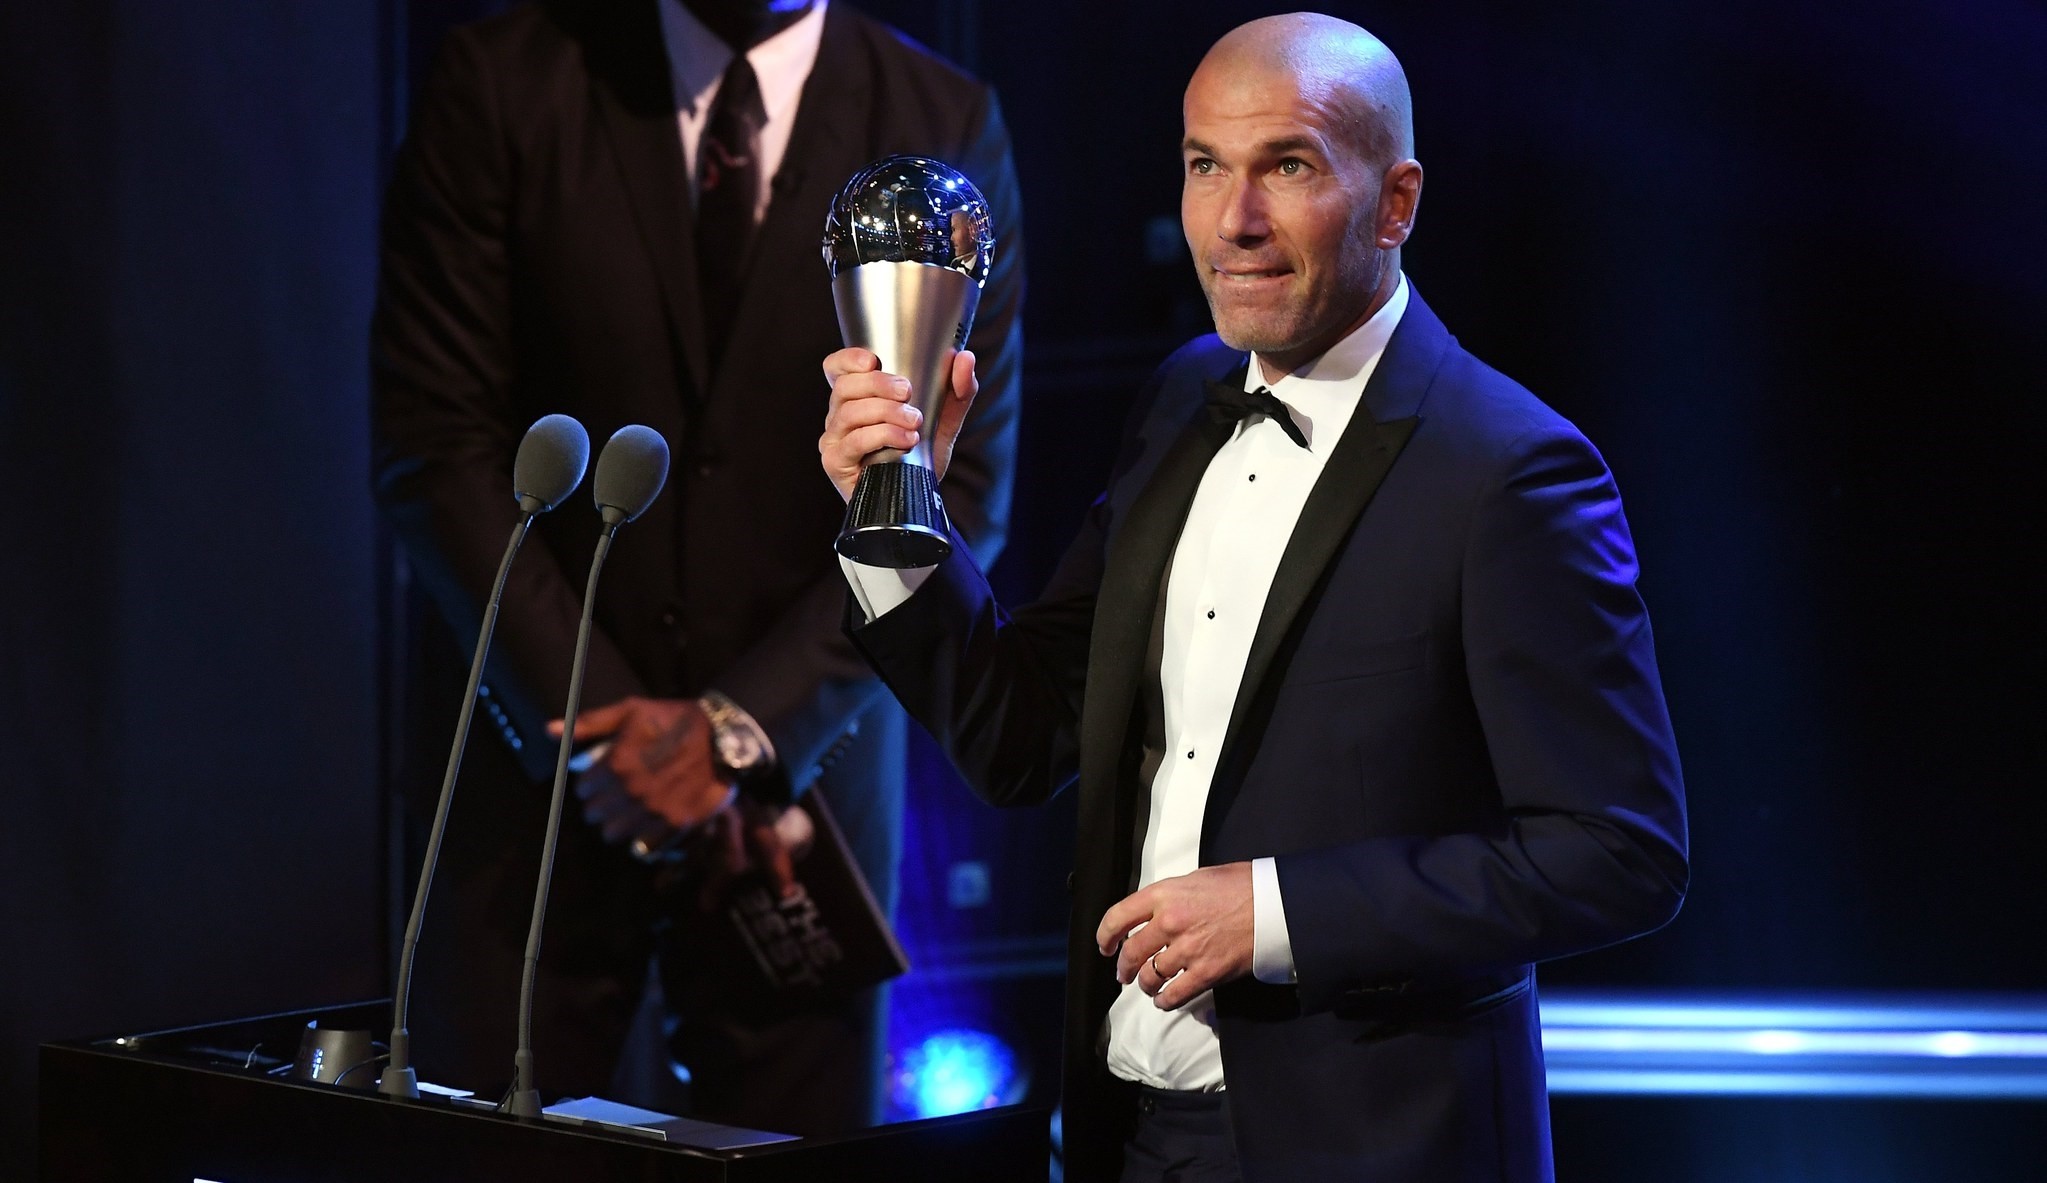 Real Madrid coach Zinedine Zidane picks up the FIFA Men's Coach 2017 award during the Best FIFA Football Awards 2017 at the London Palladium, London, October 23, 2017. (EPA Photo)